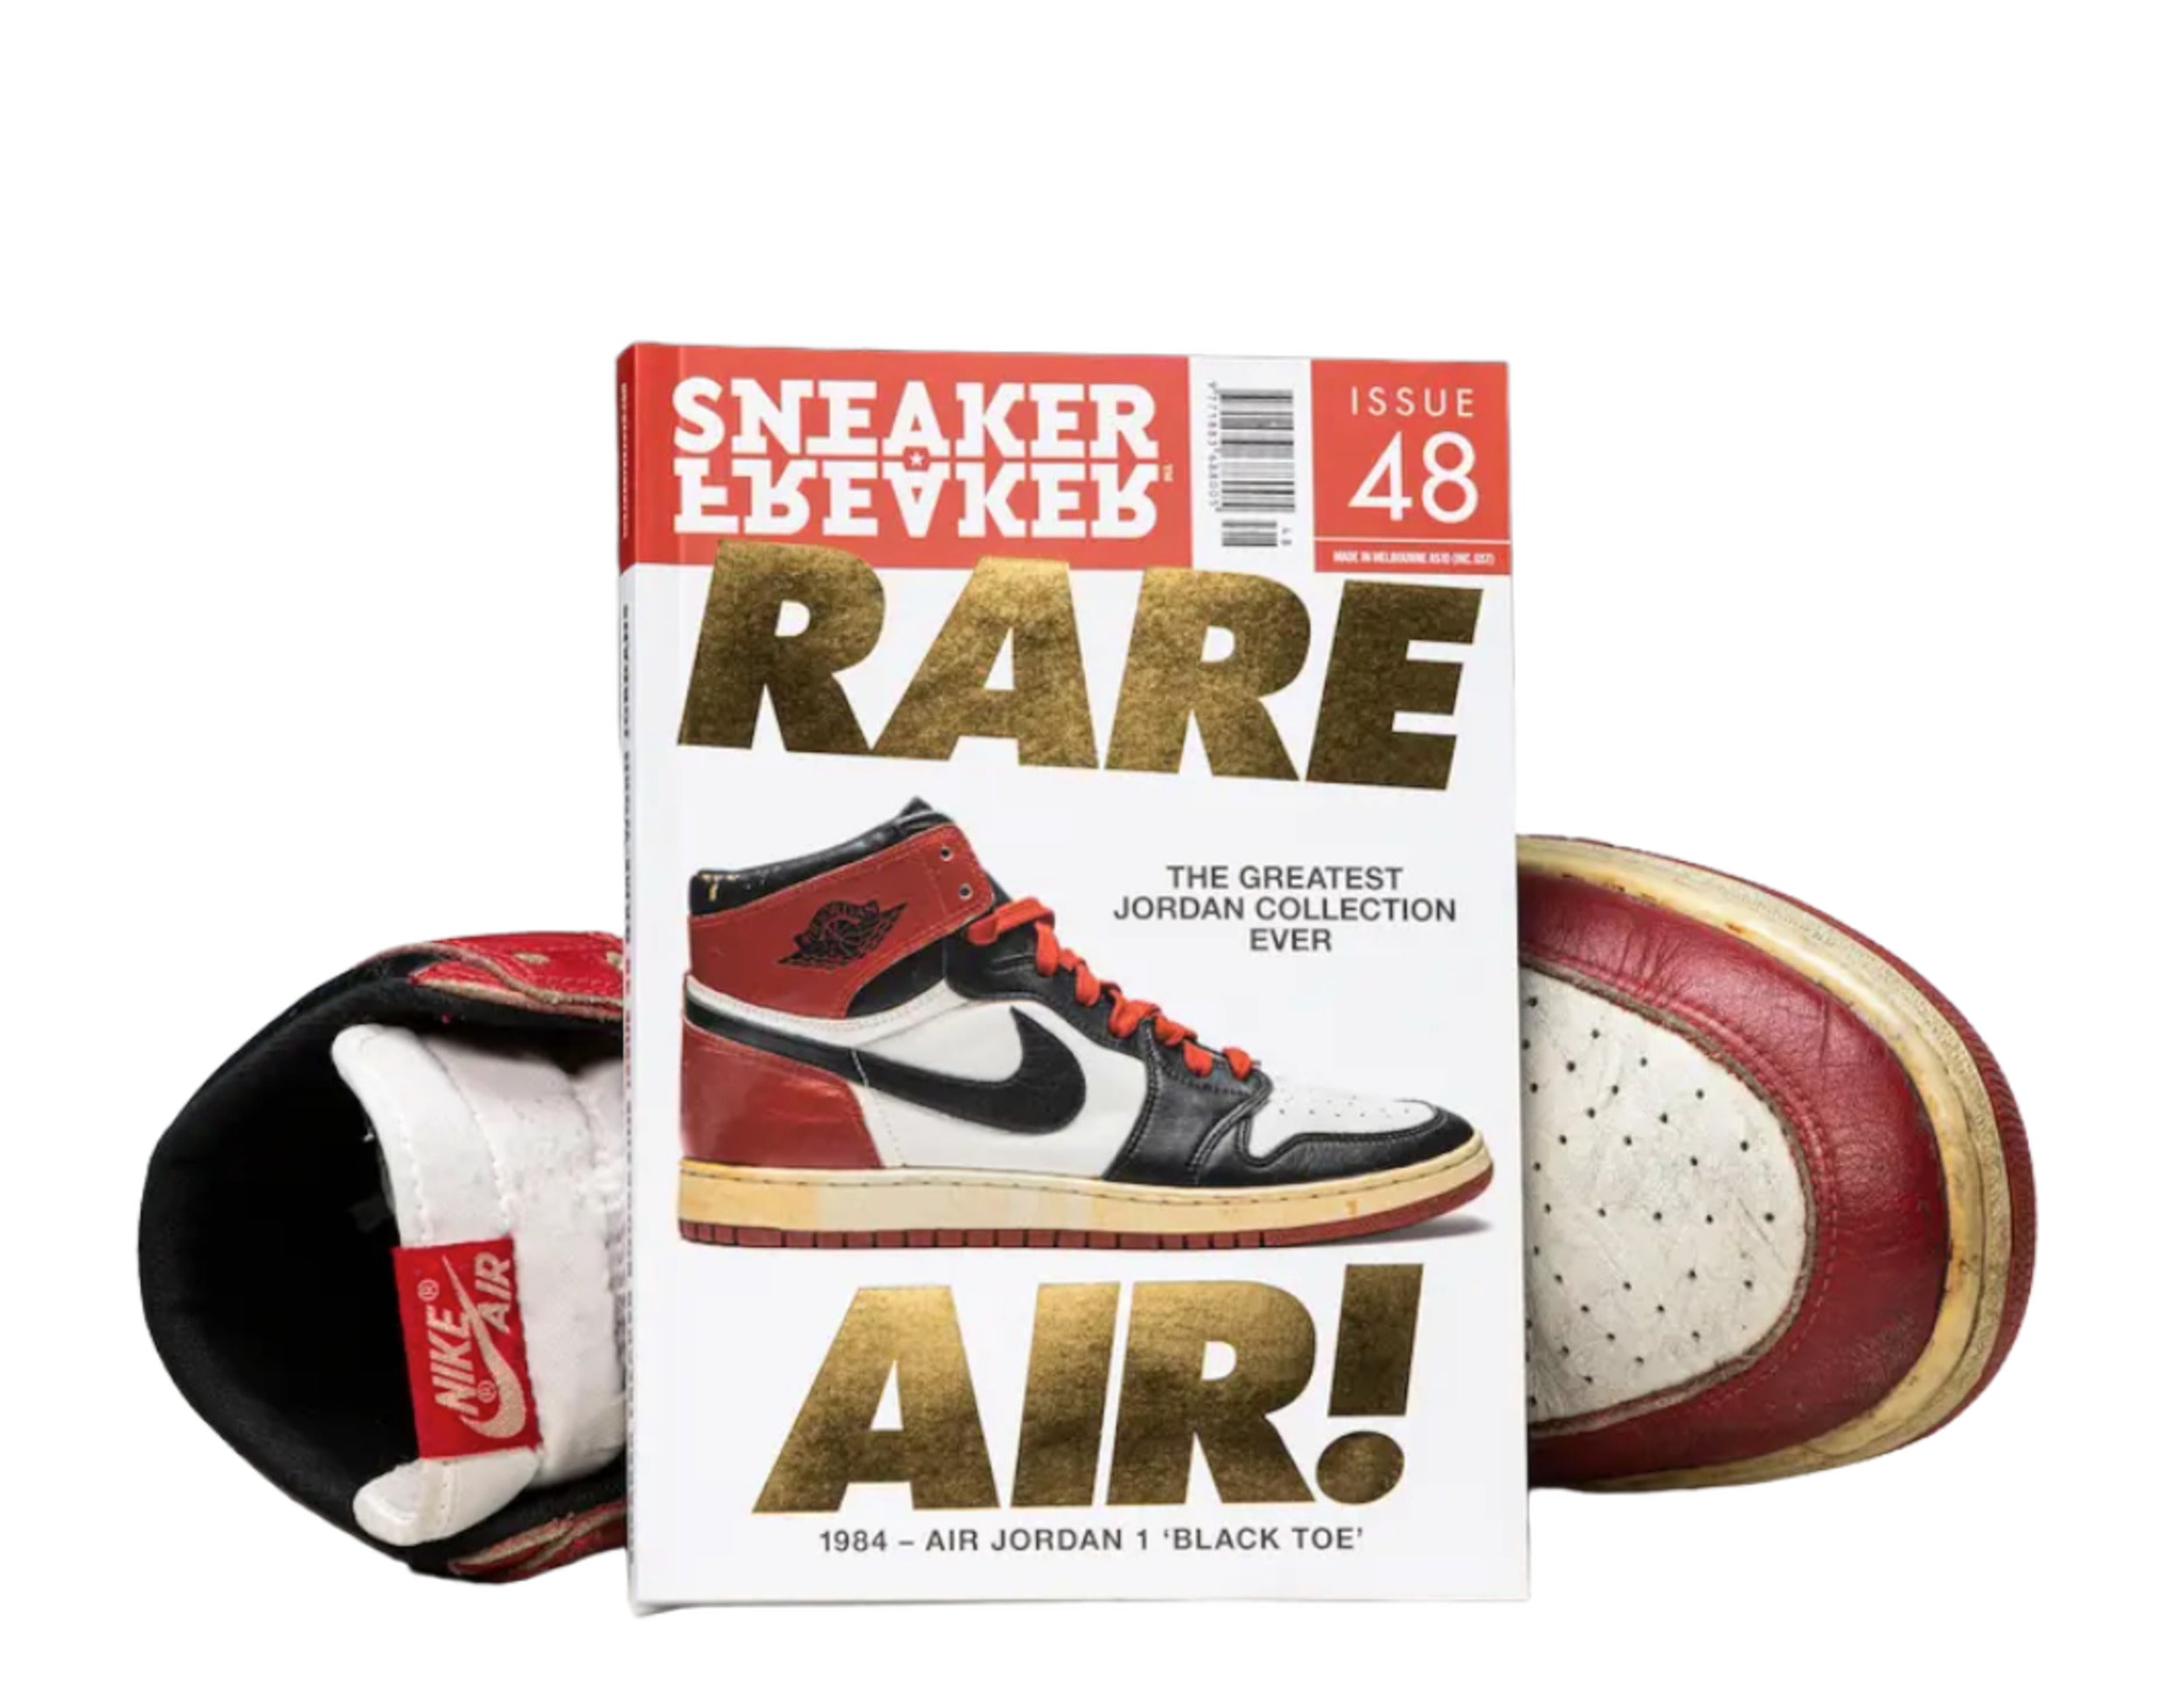 Aggregate 202+ sneaker freaker magazine subscription latest